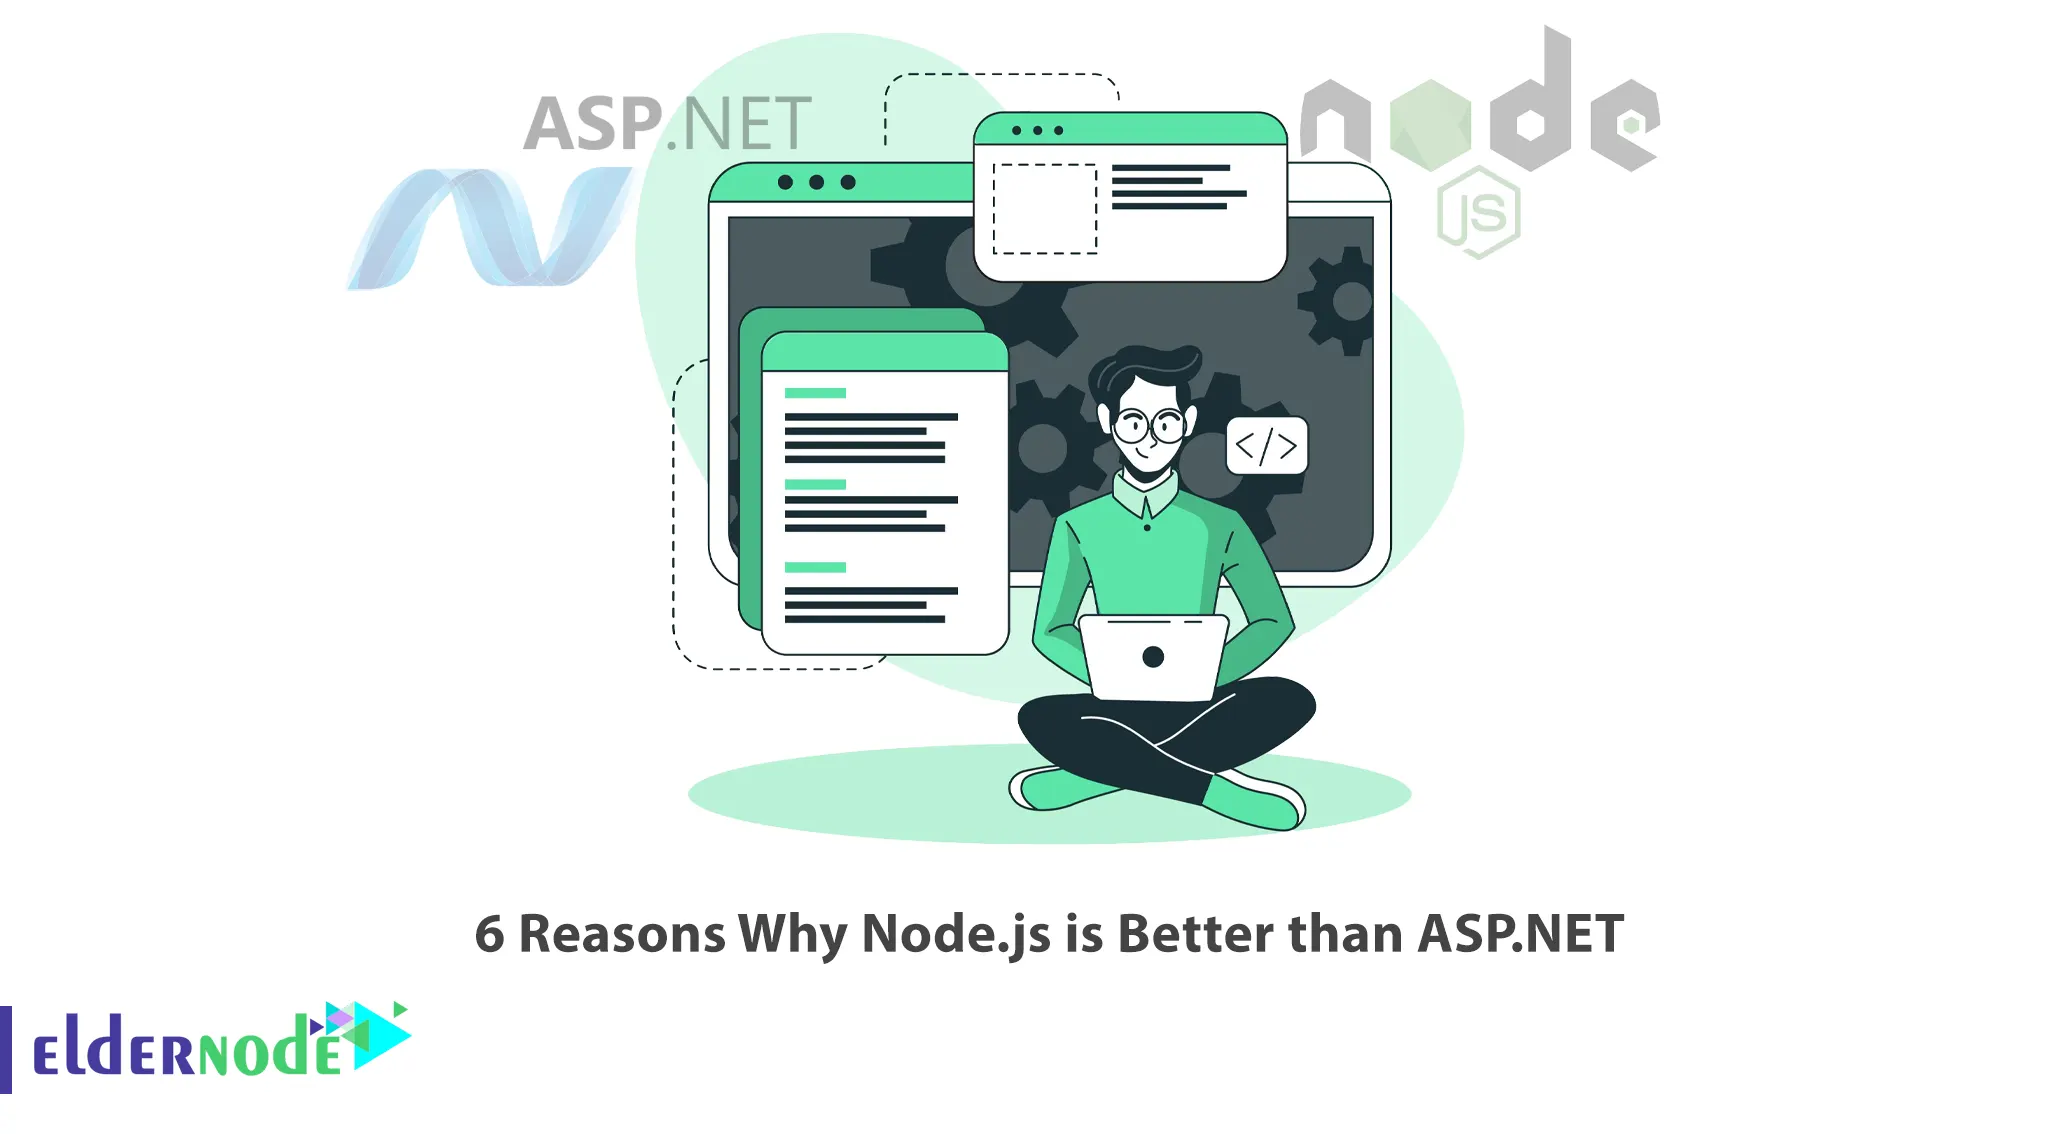 6 Reasons Why Node.js is Better than ASP.NET